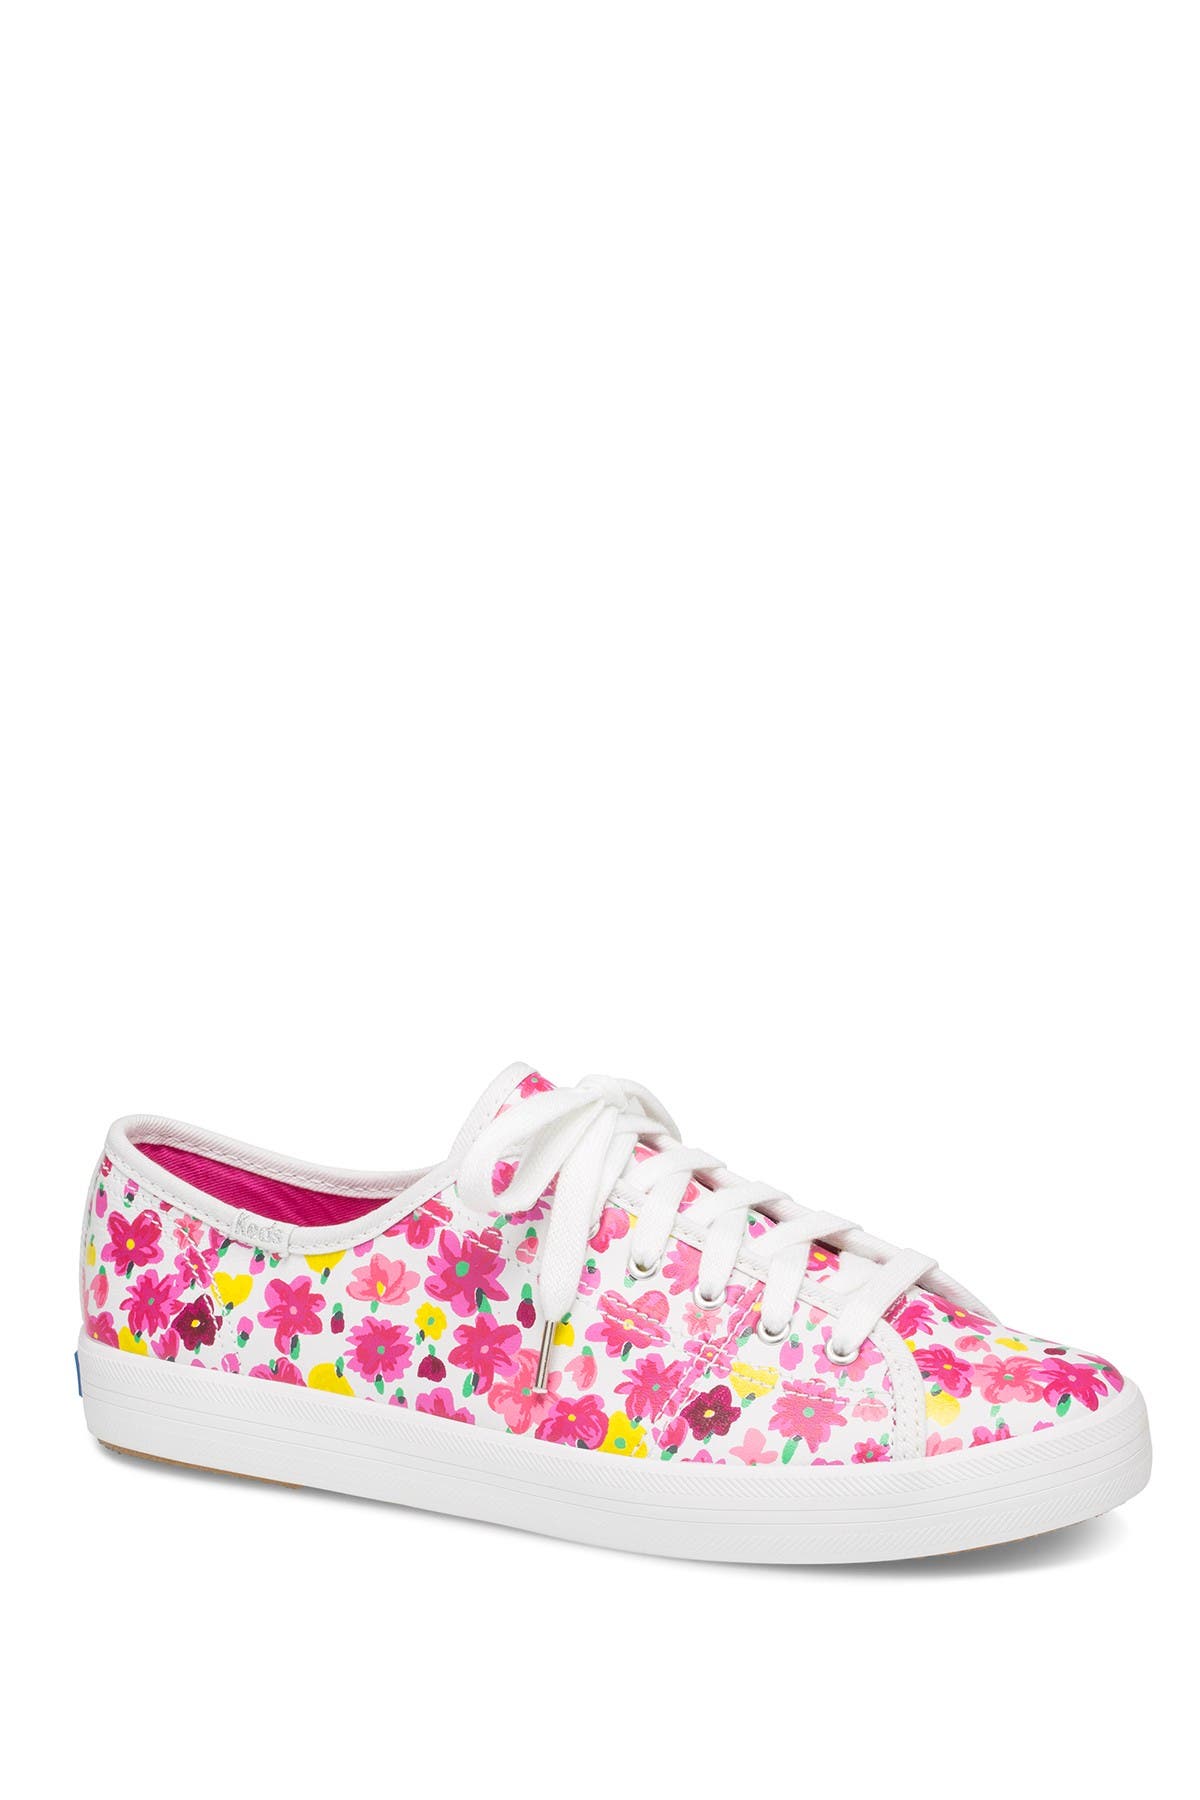 keds floral print sneakers